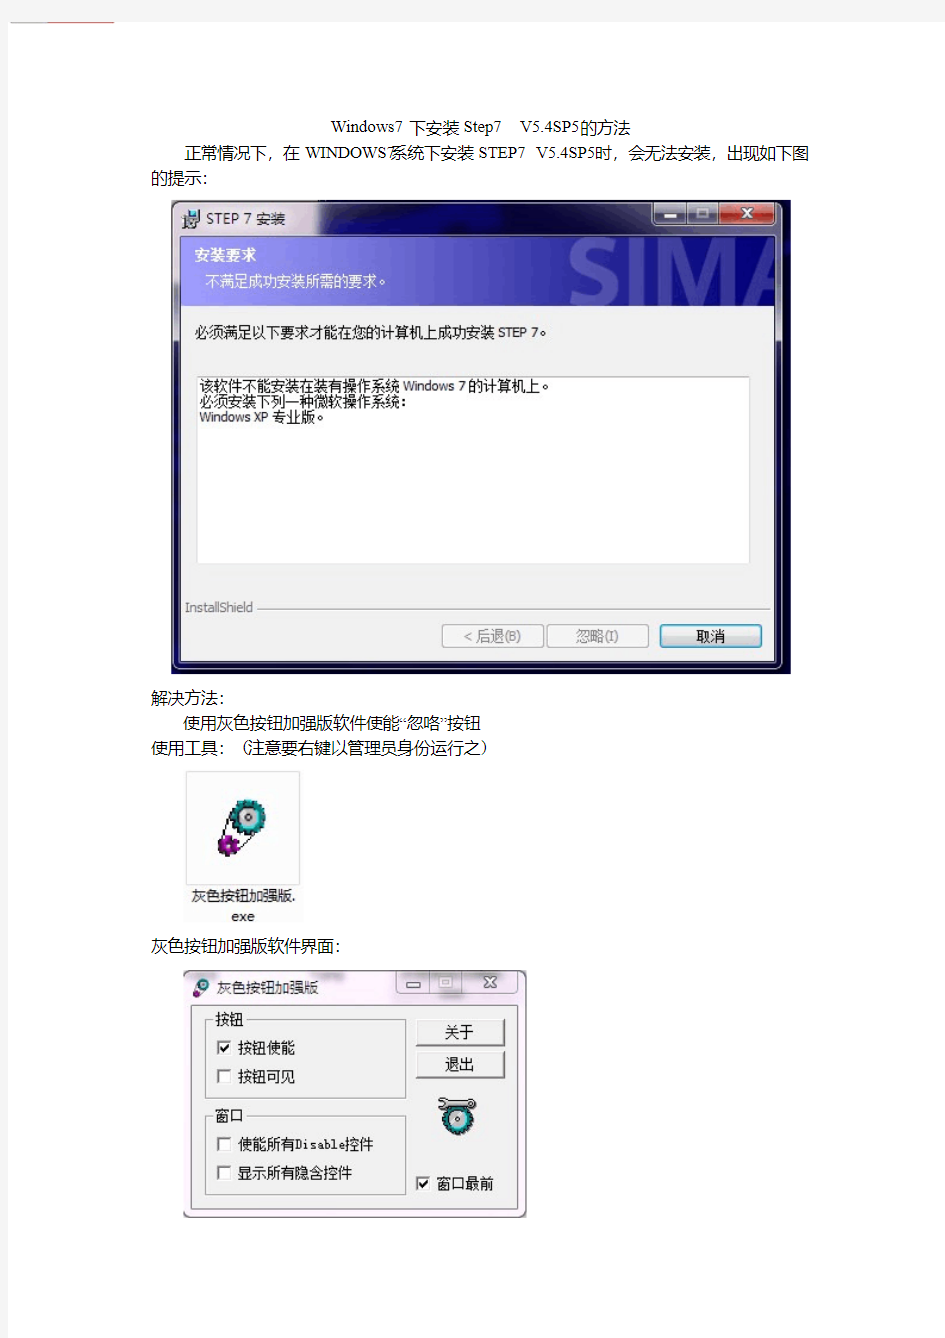 Windows7旗舰版下安装Step7V5.4SP5的方法